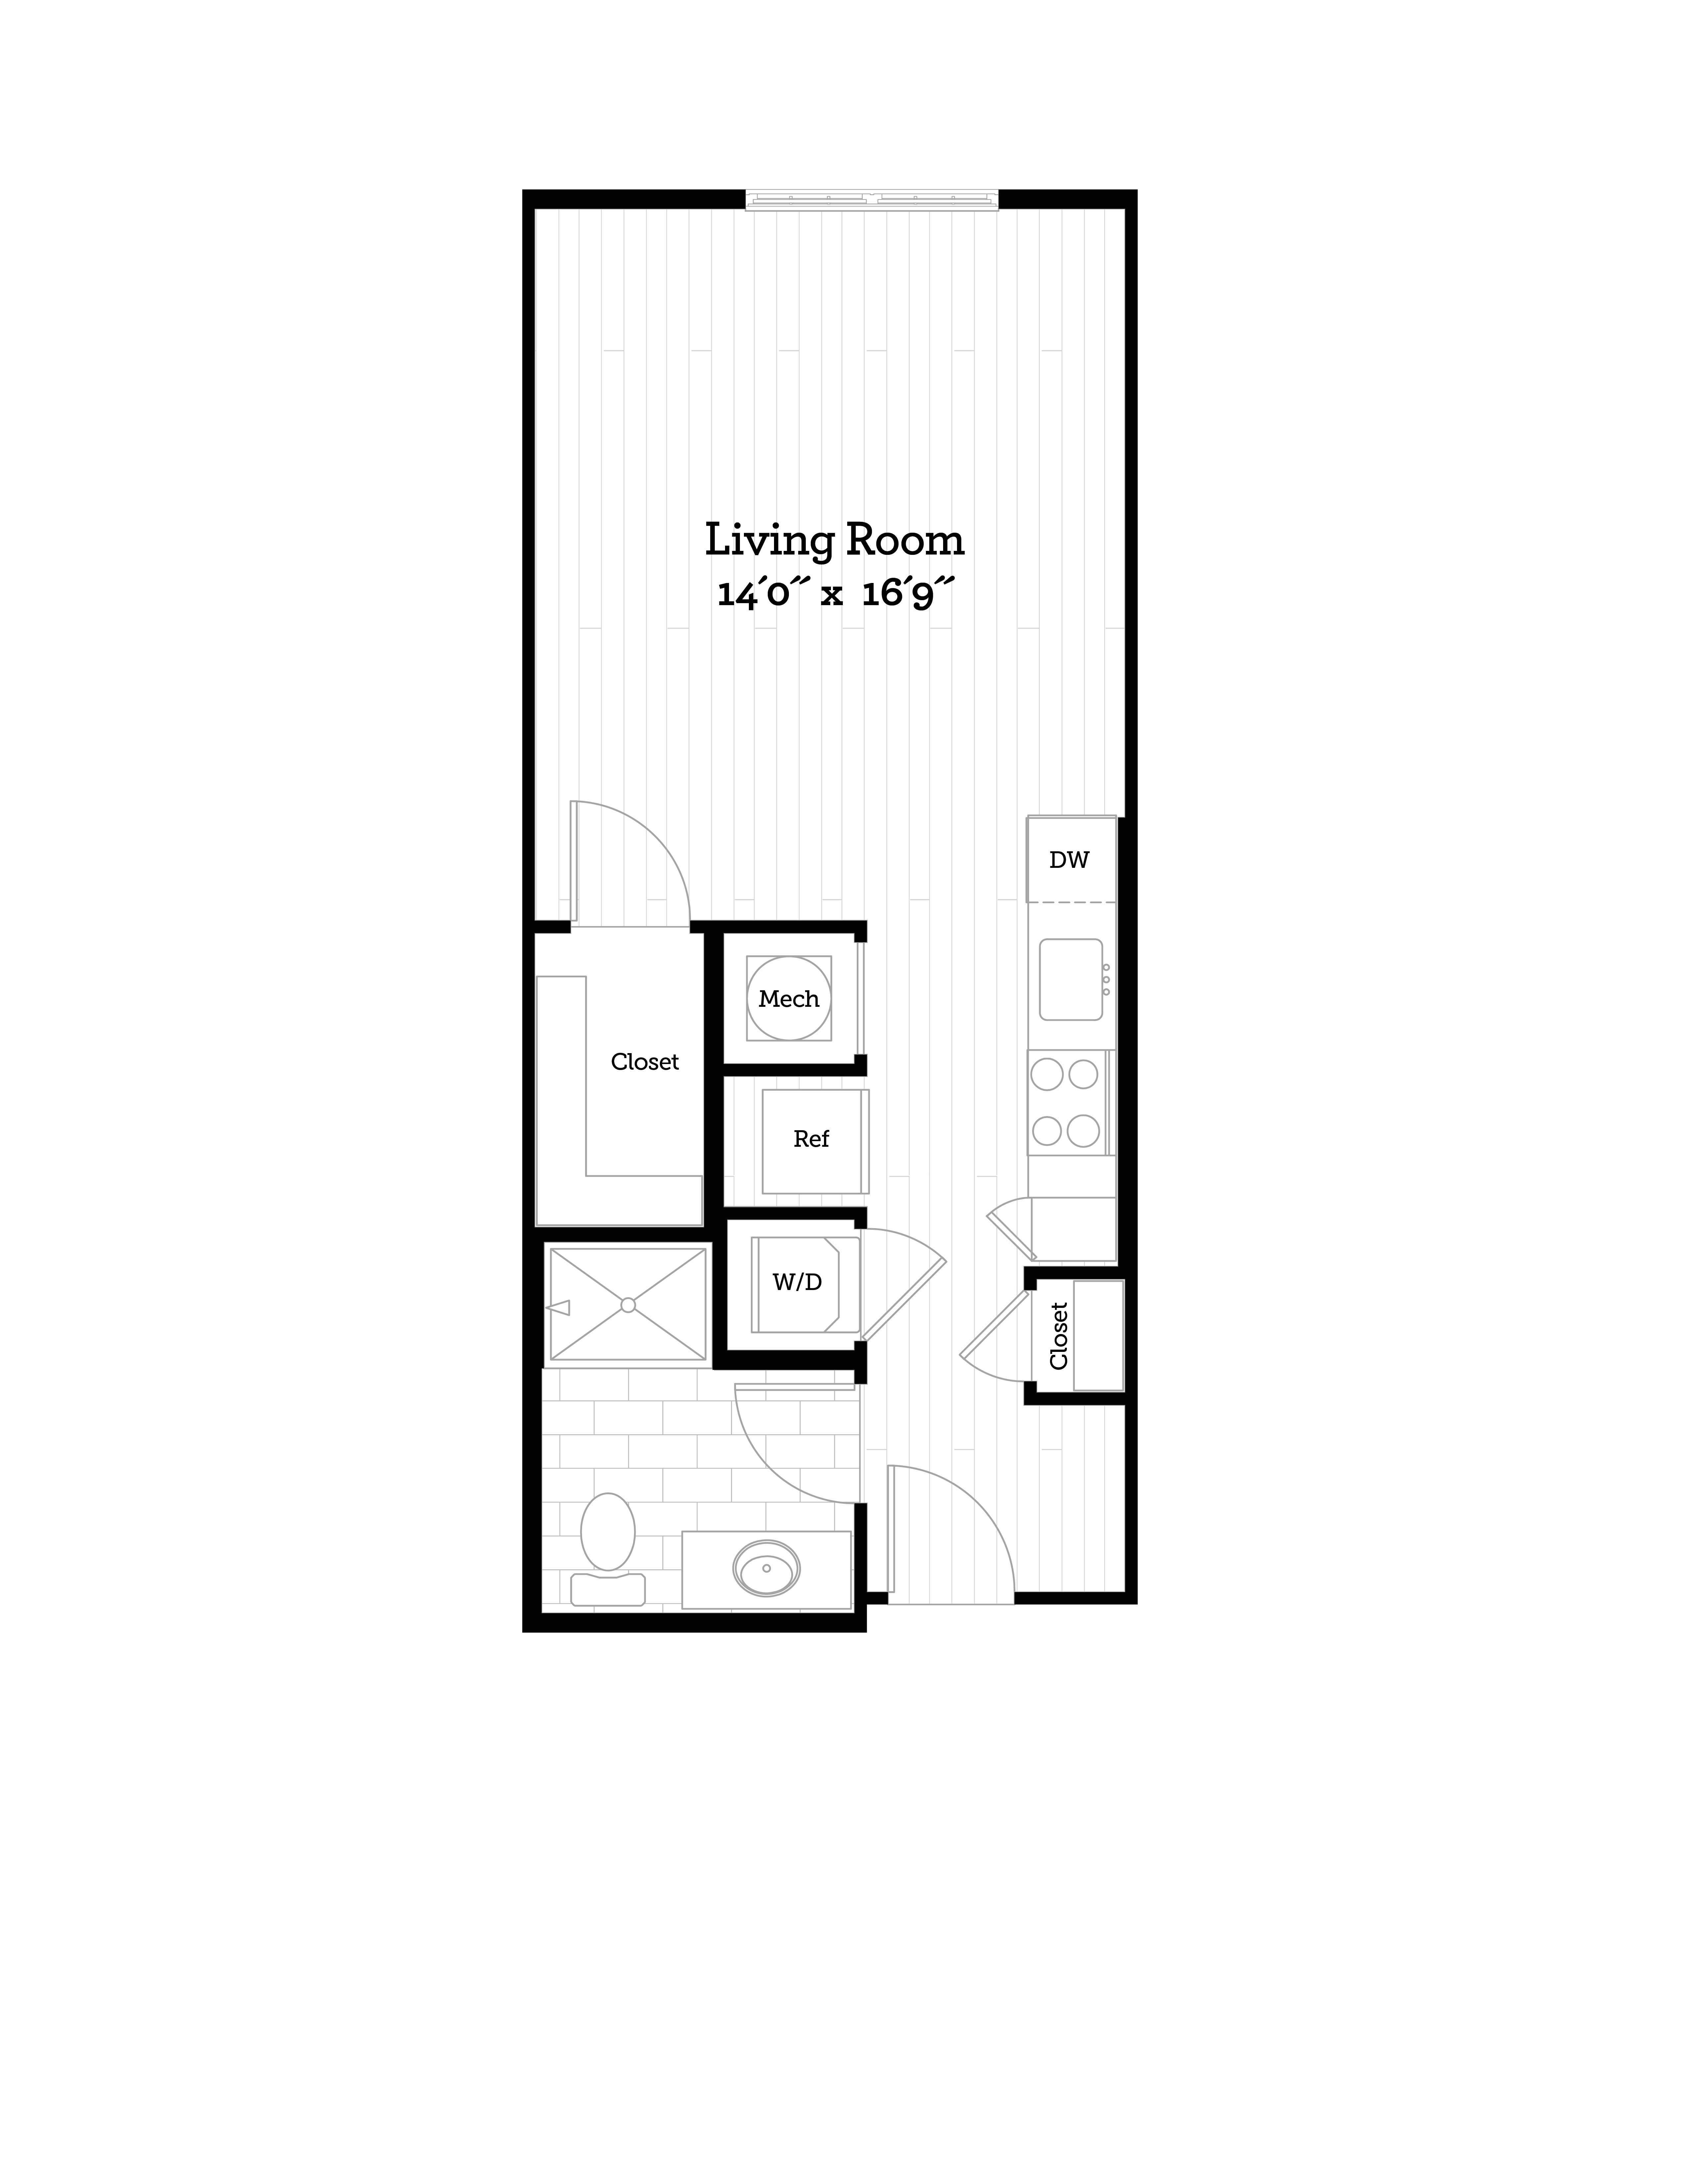 Apartment 407 floorplan